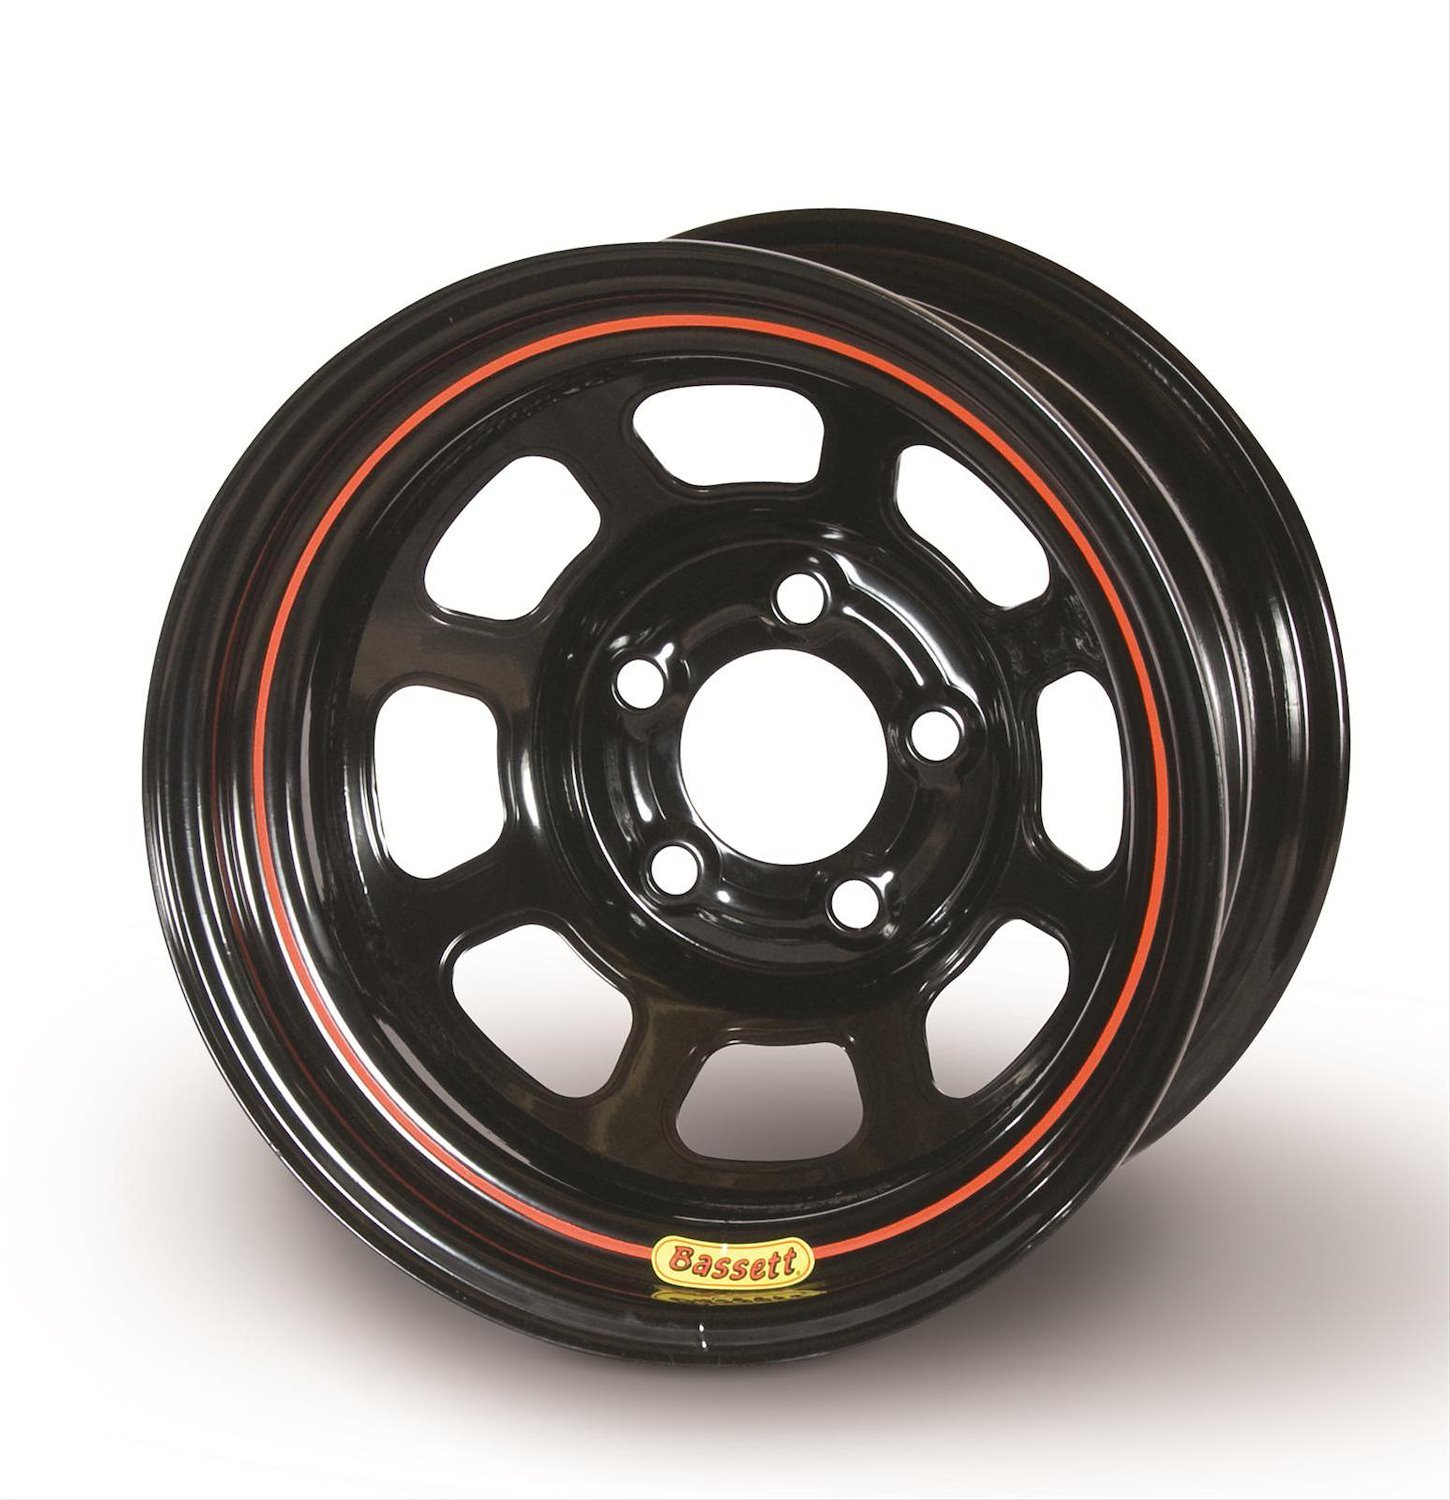 47SF3 Lightweight D-Hole Wheel Size: 14" x 7", Black